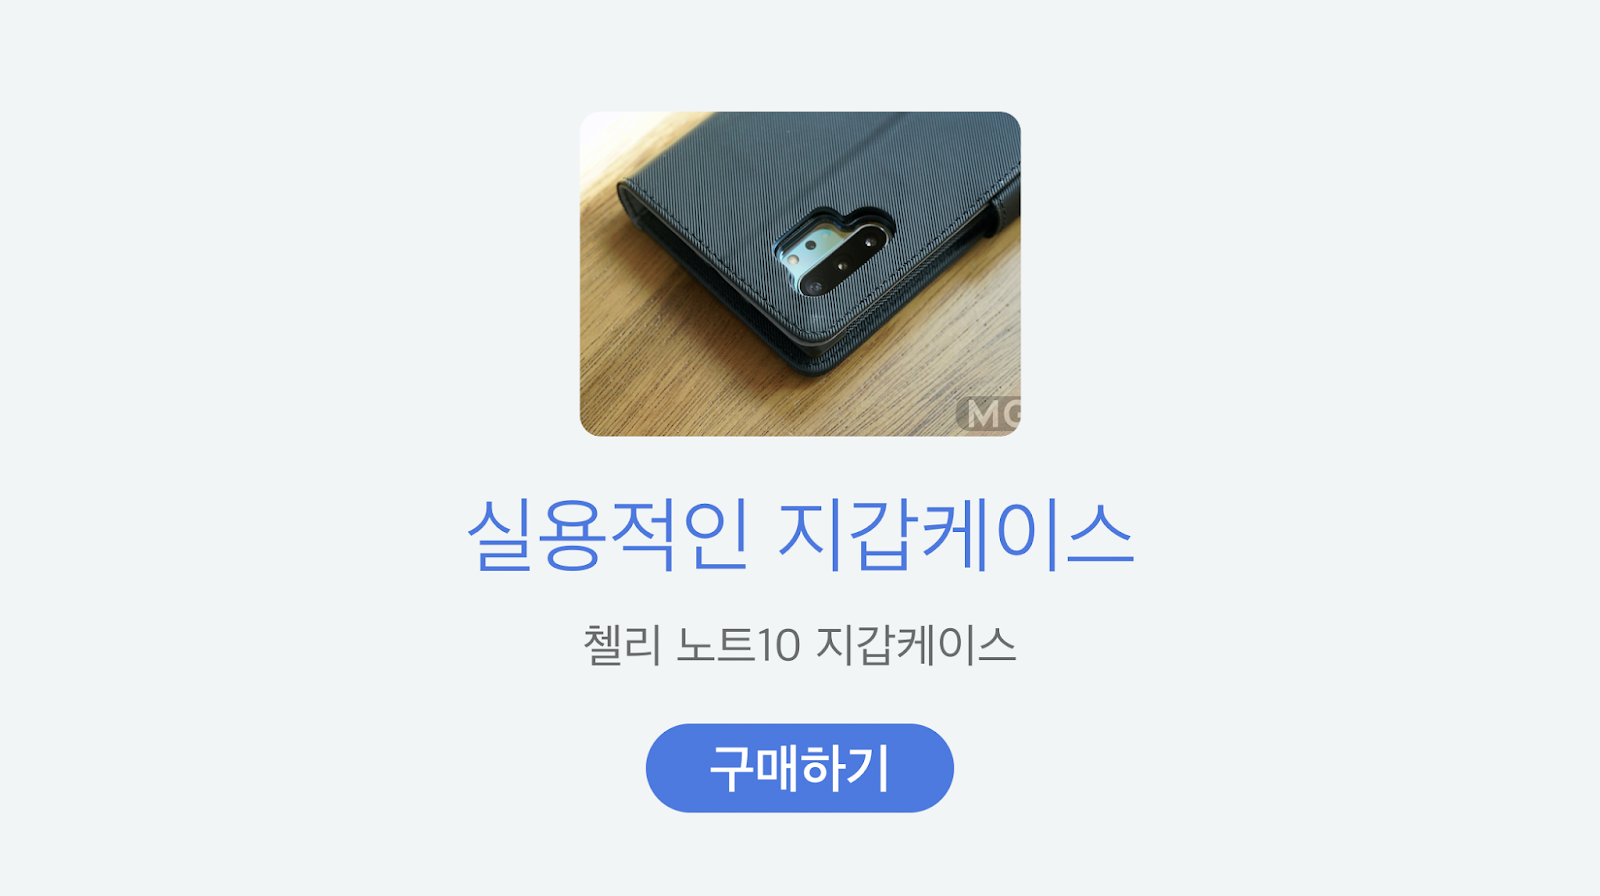 https://smartstore.naver.com/hyodongkorea/products/4775198631